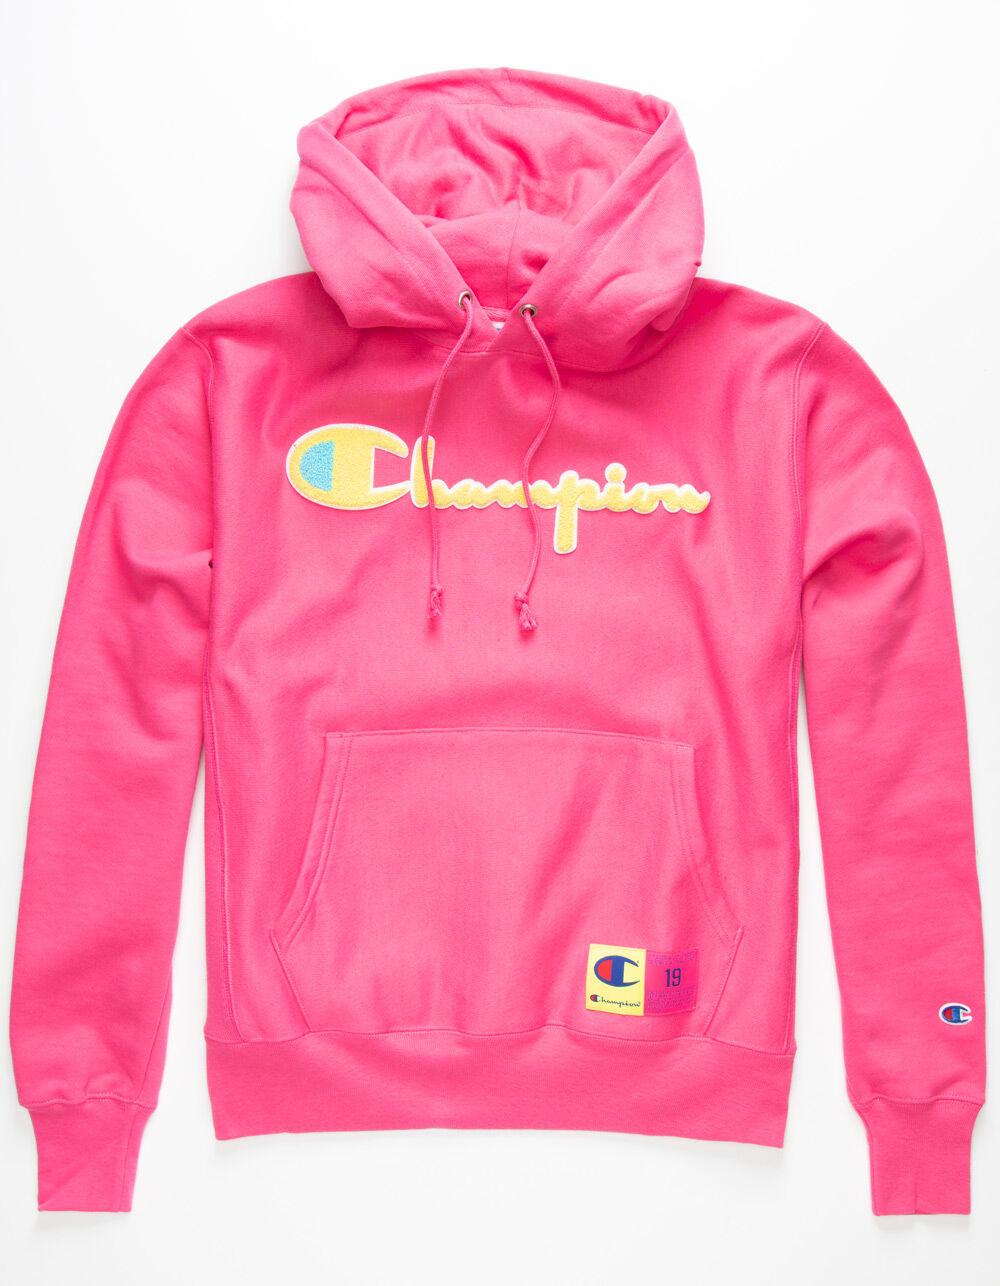 men pink champion hoodie Promotions